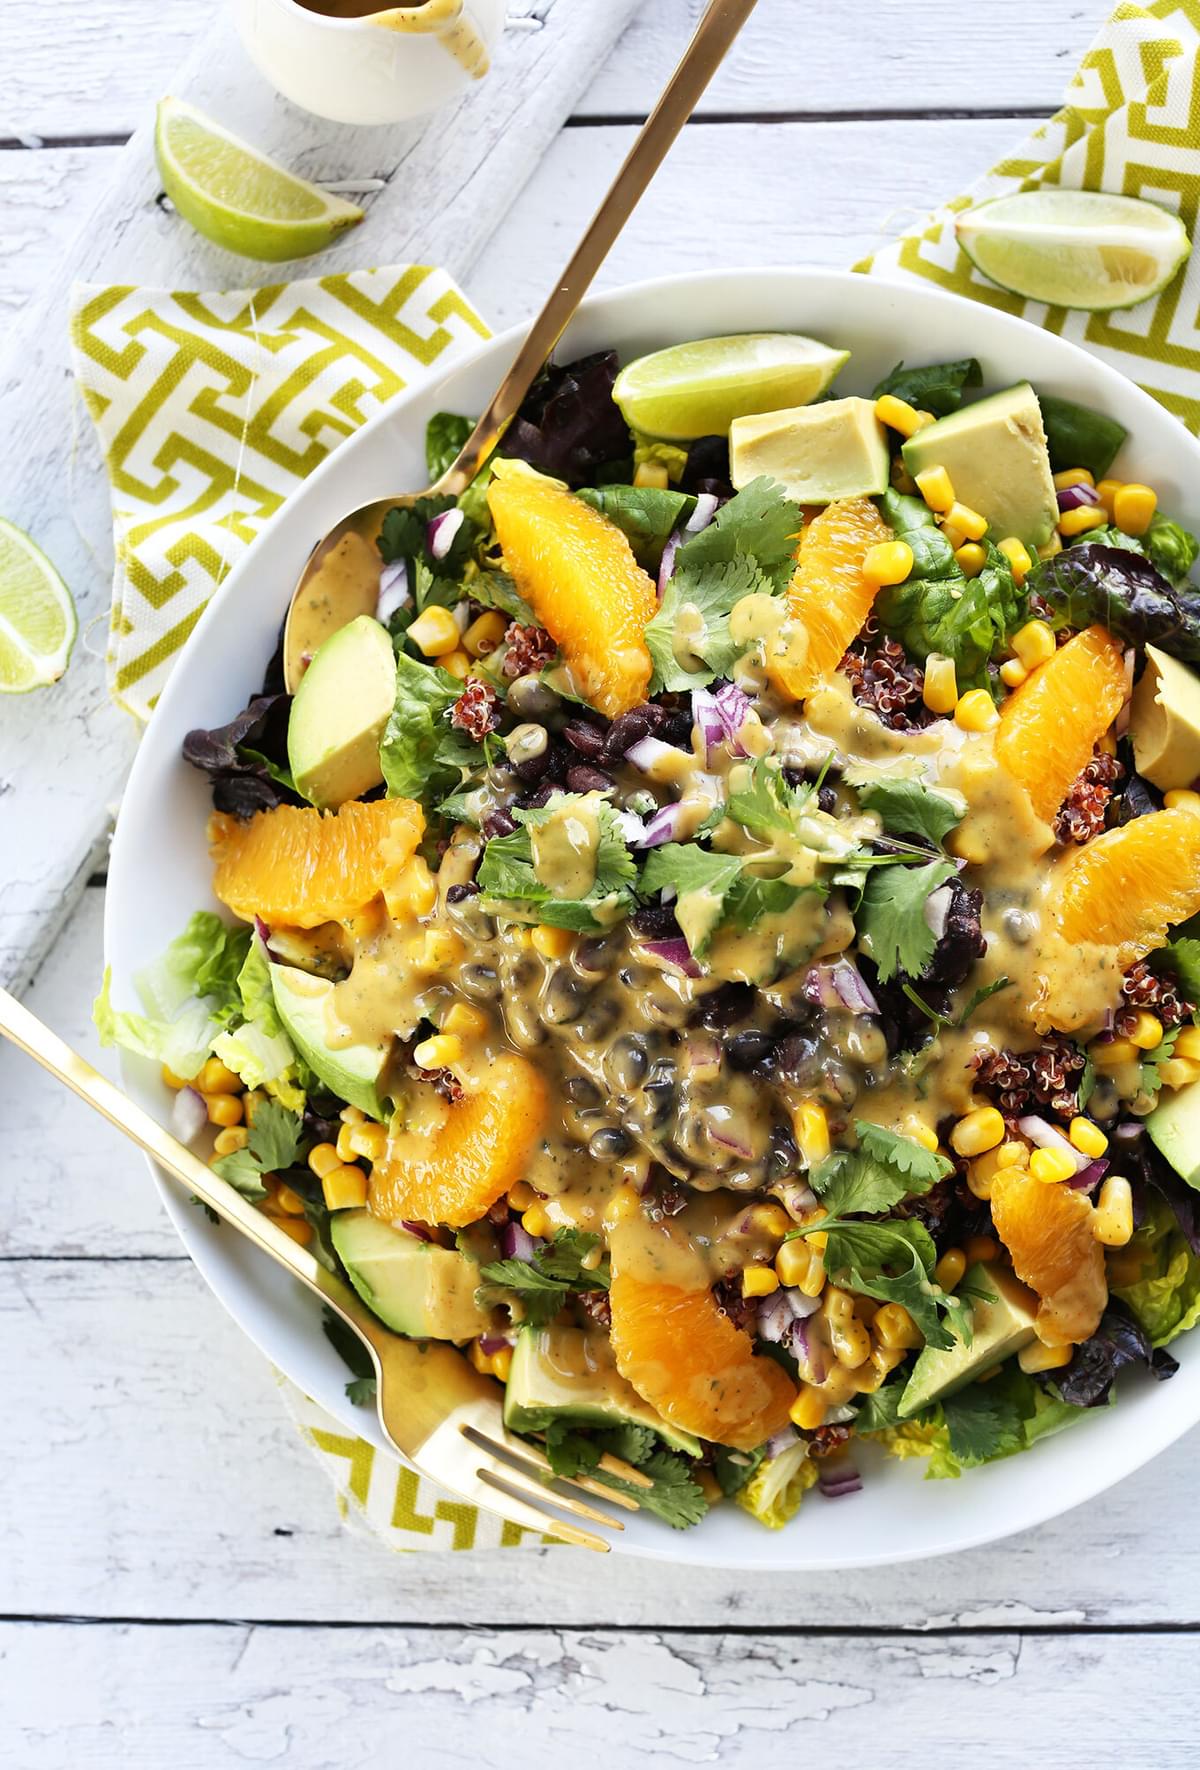 HEALTHY Vegan Mexican Quinoa Salad with Black Beans Corn Avocado and a Creamy Orange Chili Dressing vegan